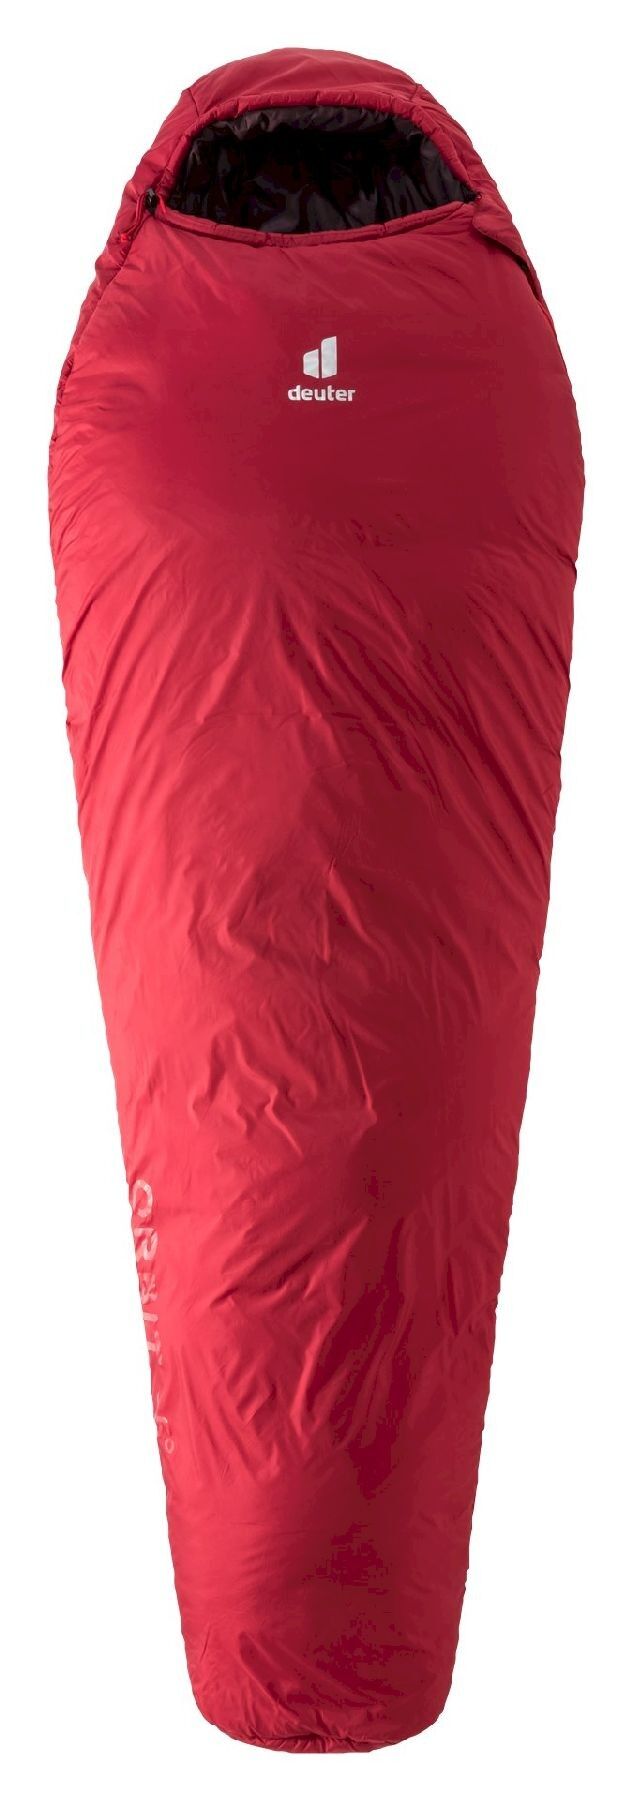 Deuter Orbit -5° - Sleeping bag